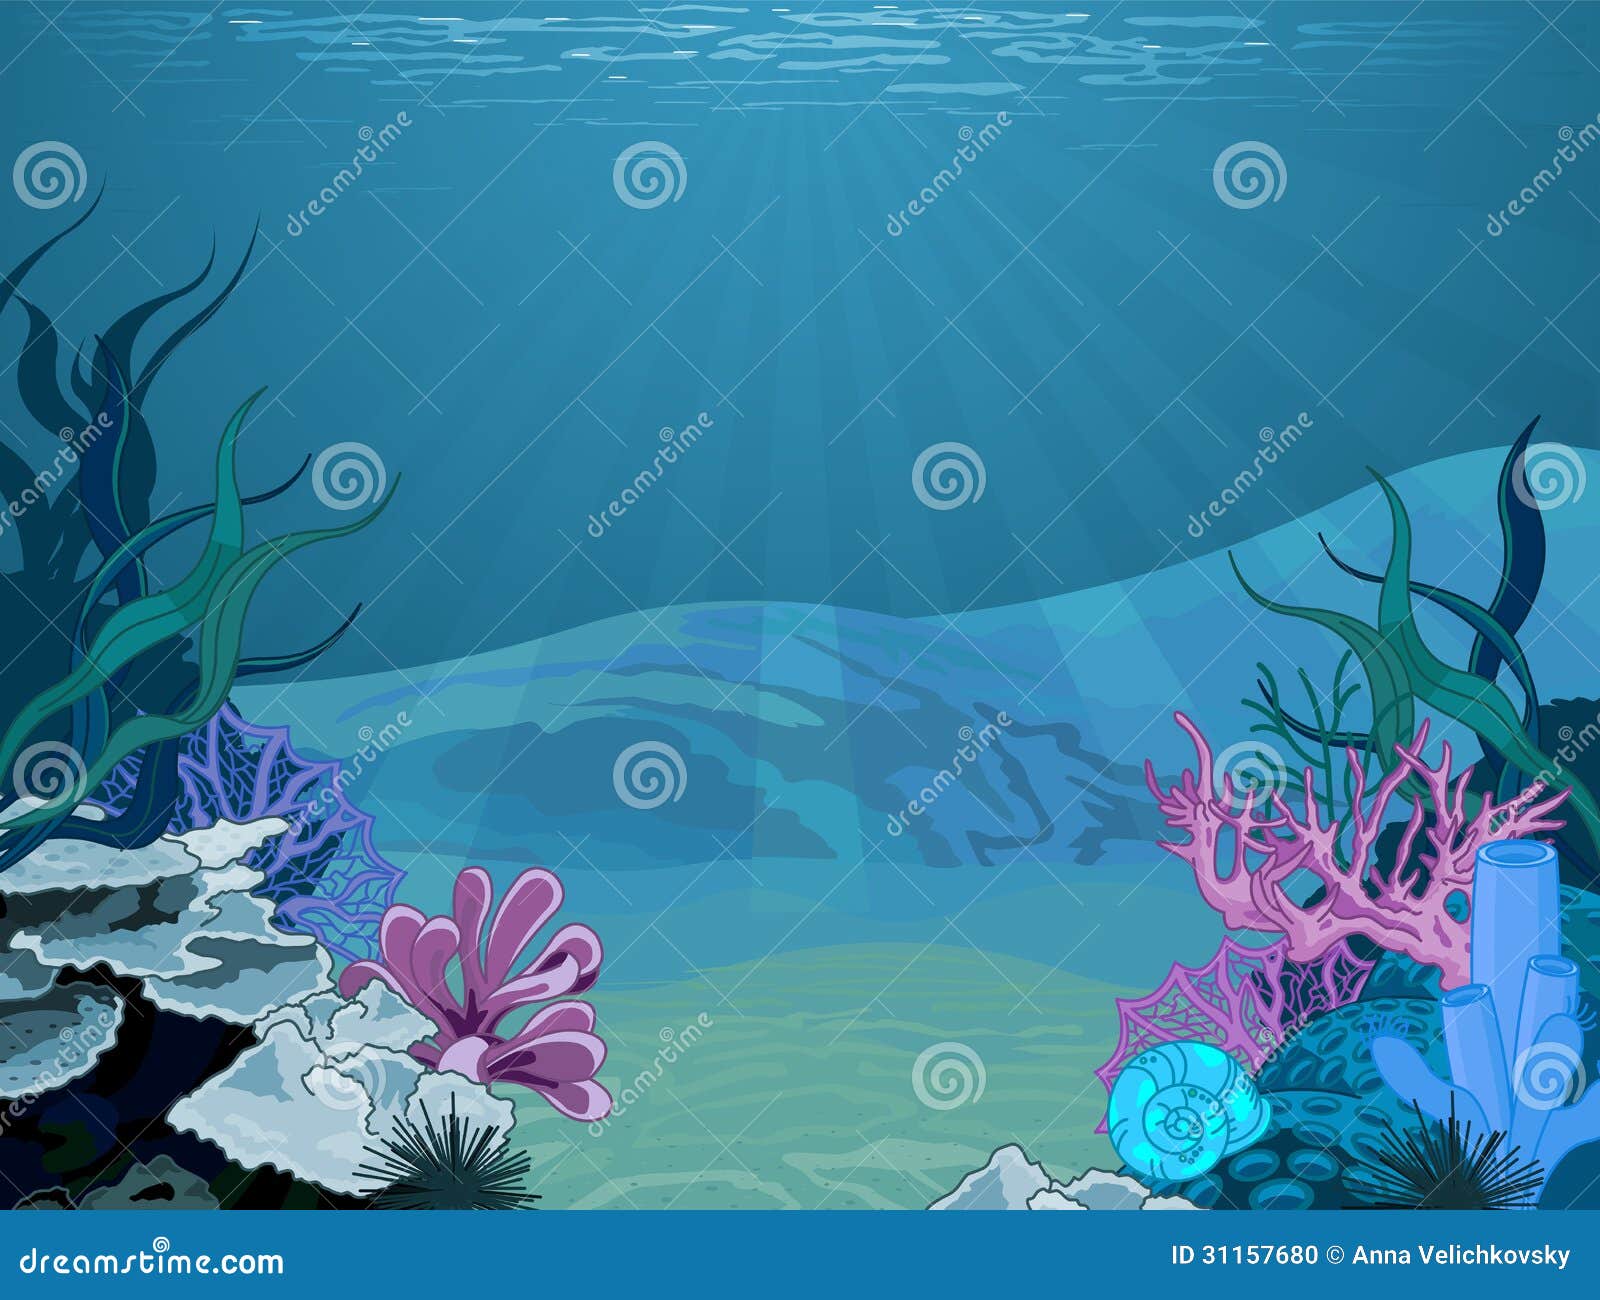 clipart of underwater scene - photo #6